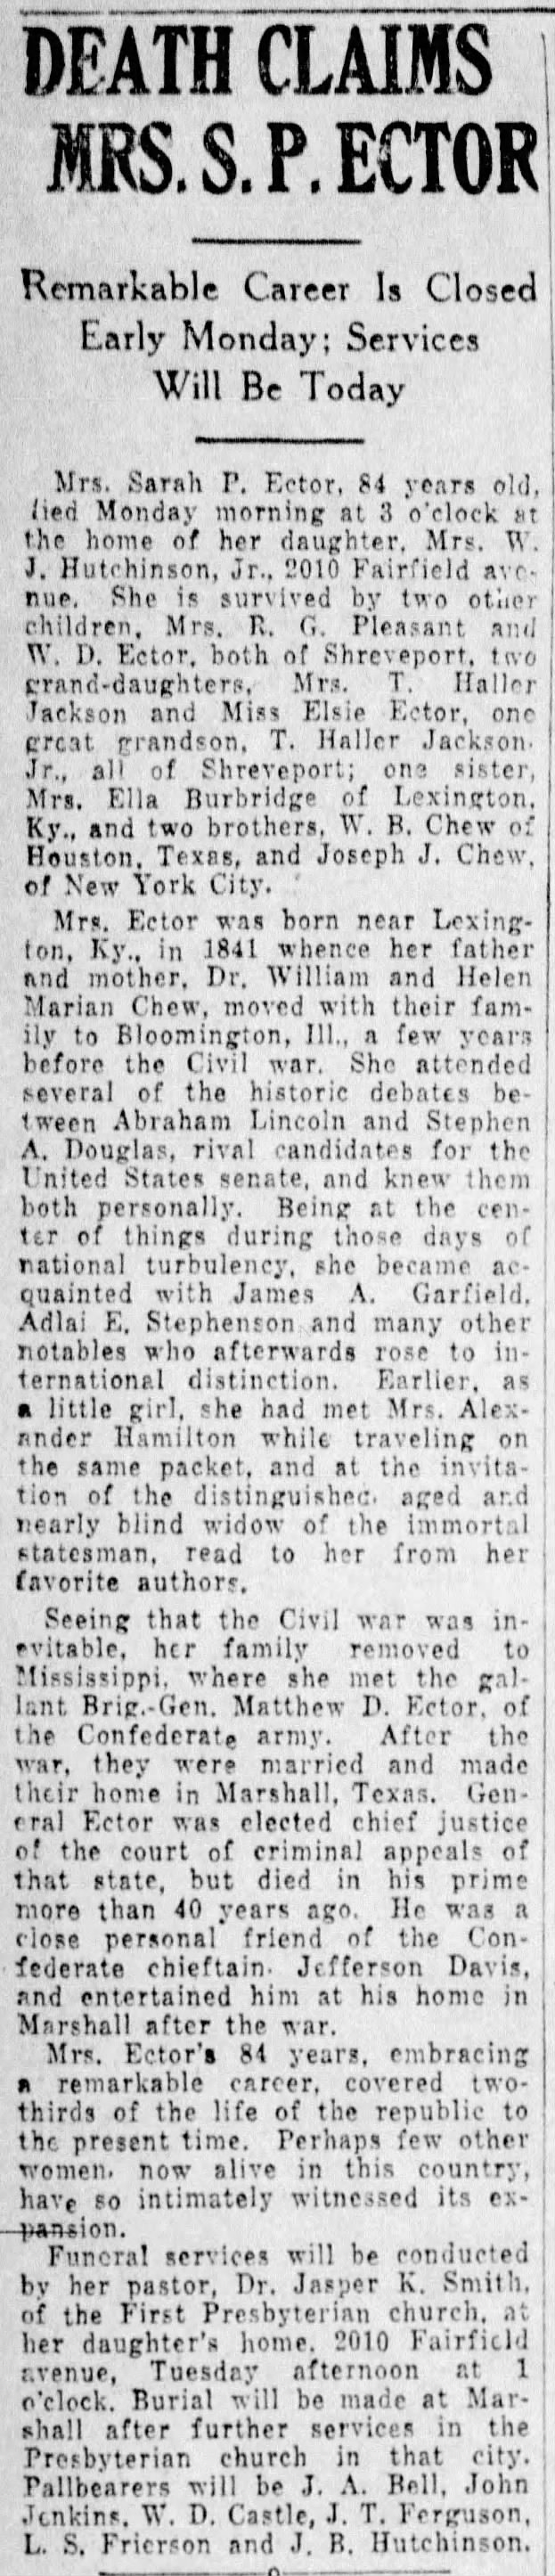 Death Claims Mrs. S. P. Ector. The Shreveport Times (Shreveport, Louisiana) May 5, 1925, p 8